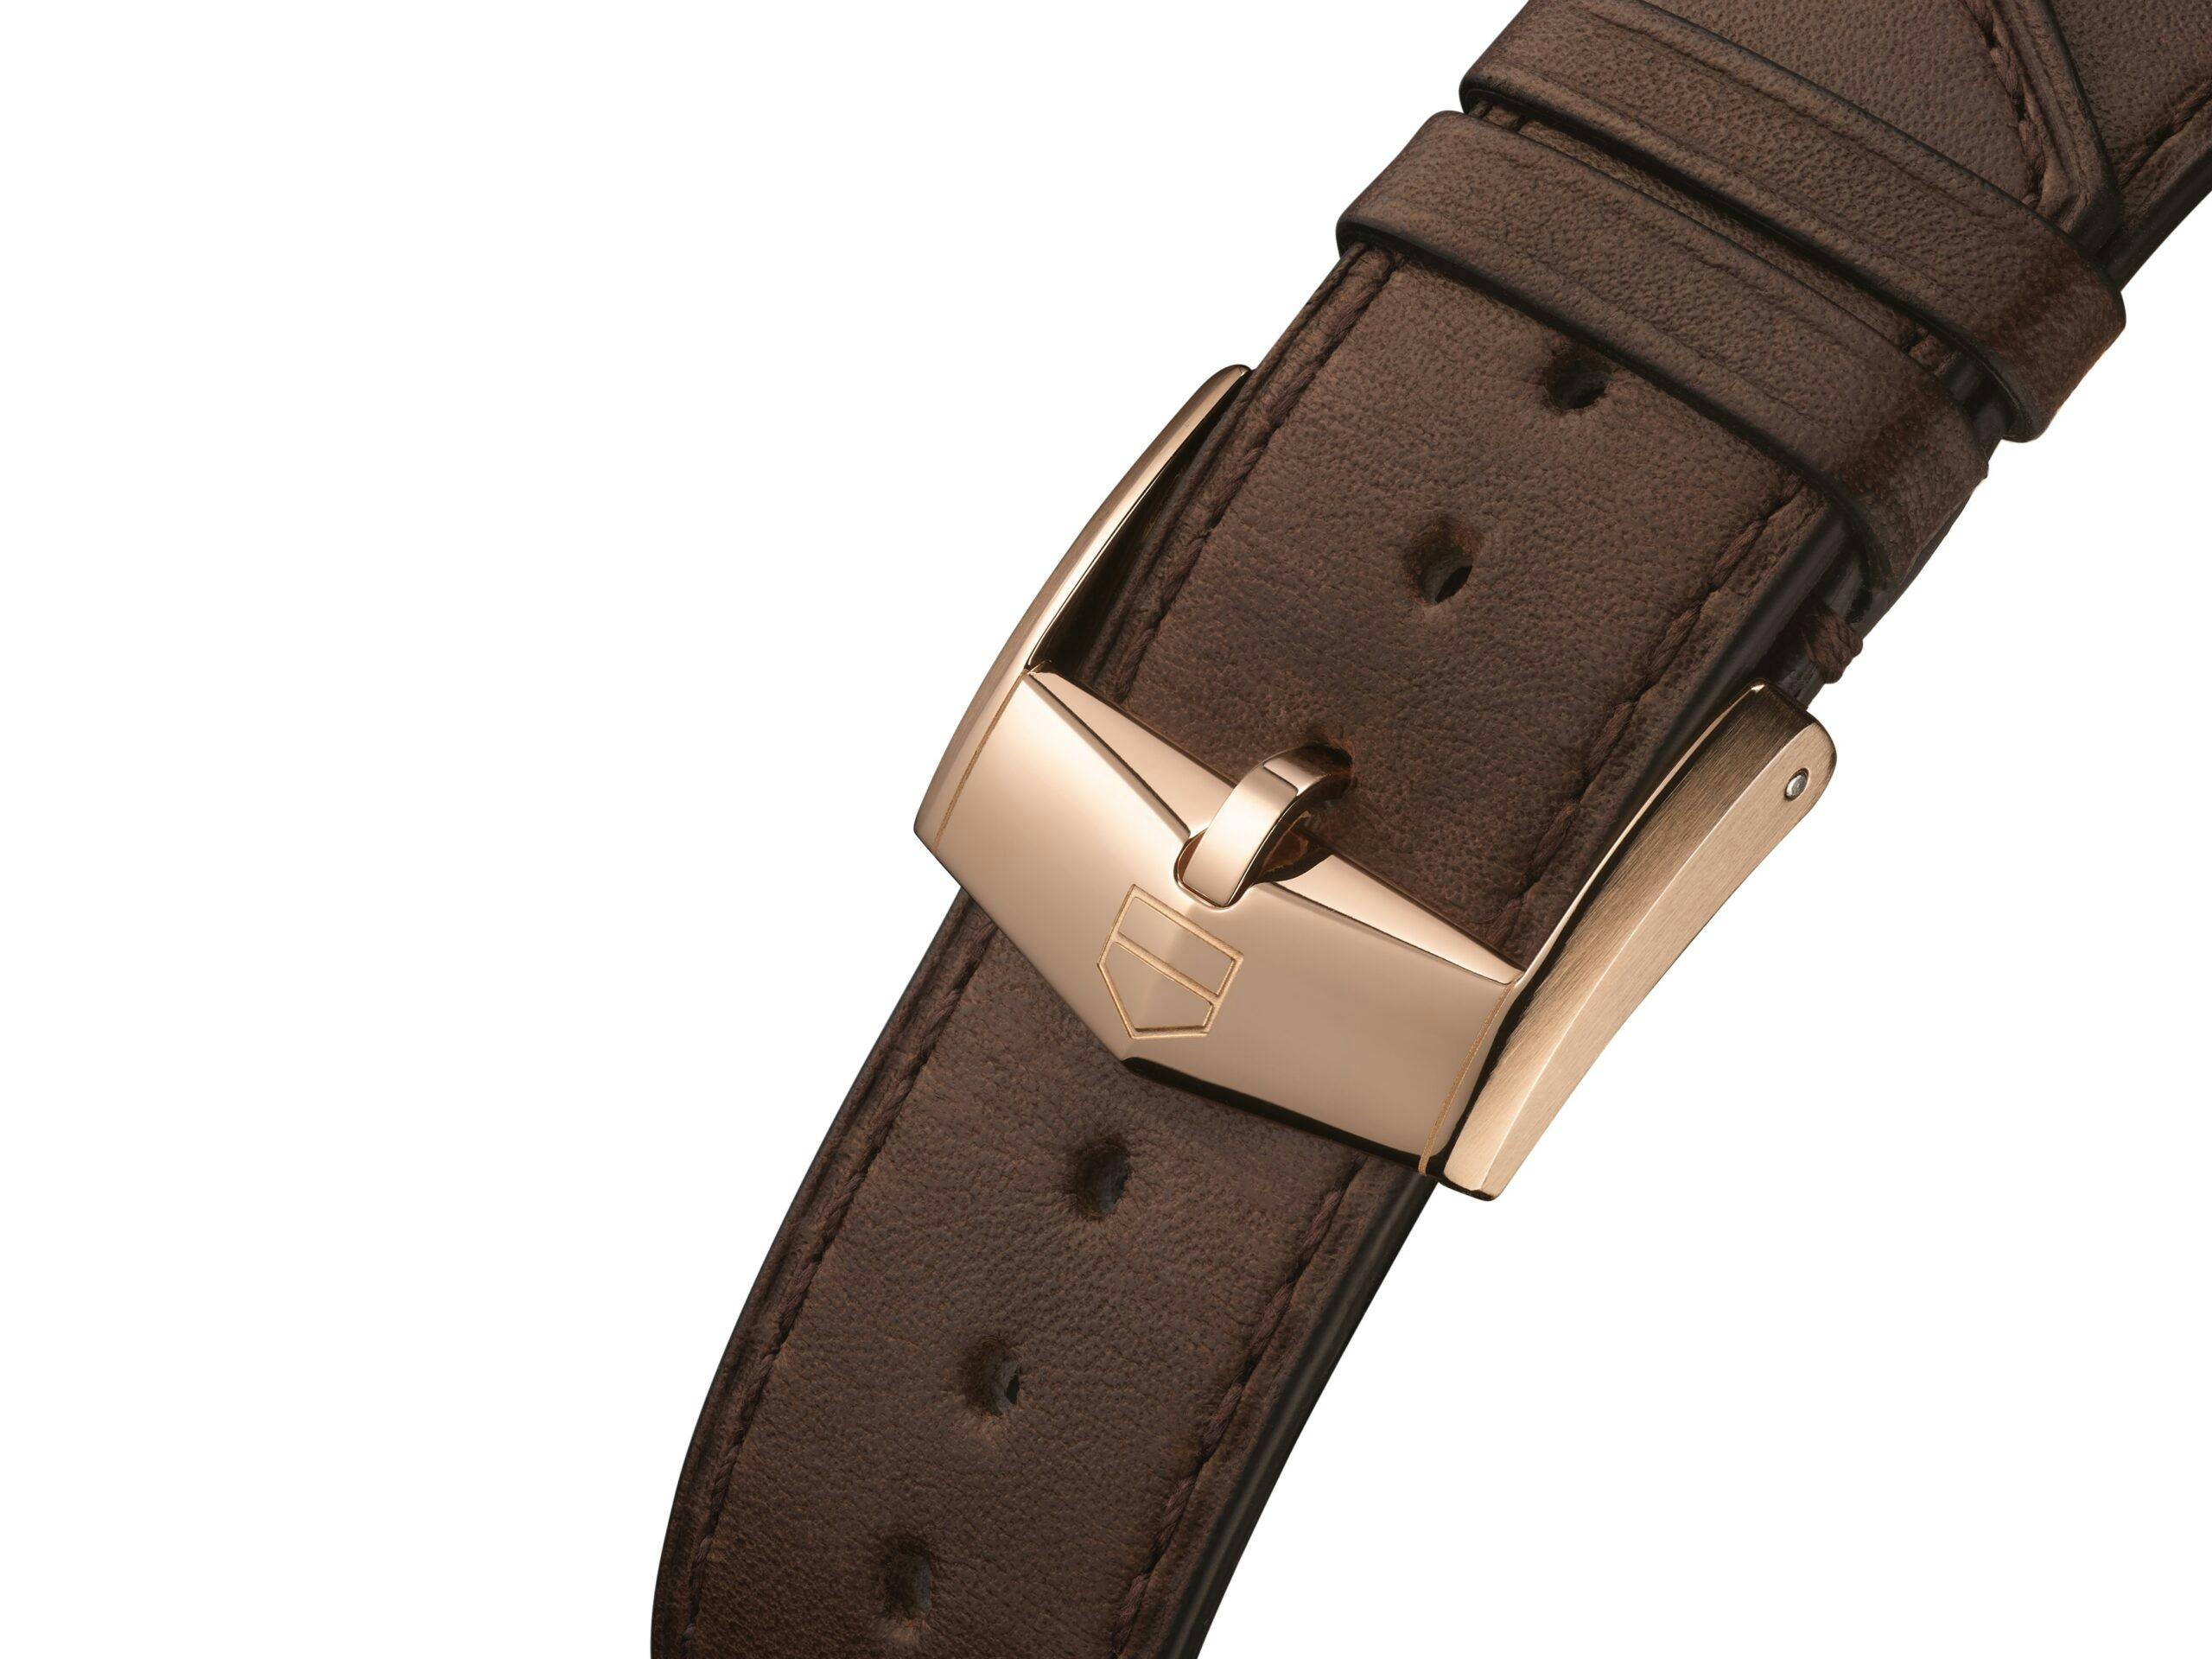 TAG Heuer Carrera Chronosprint leather strap clasp detail